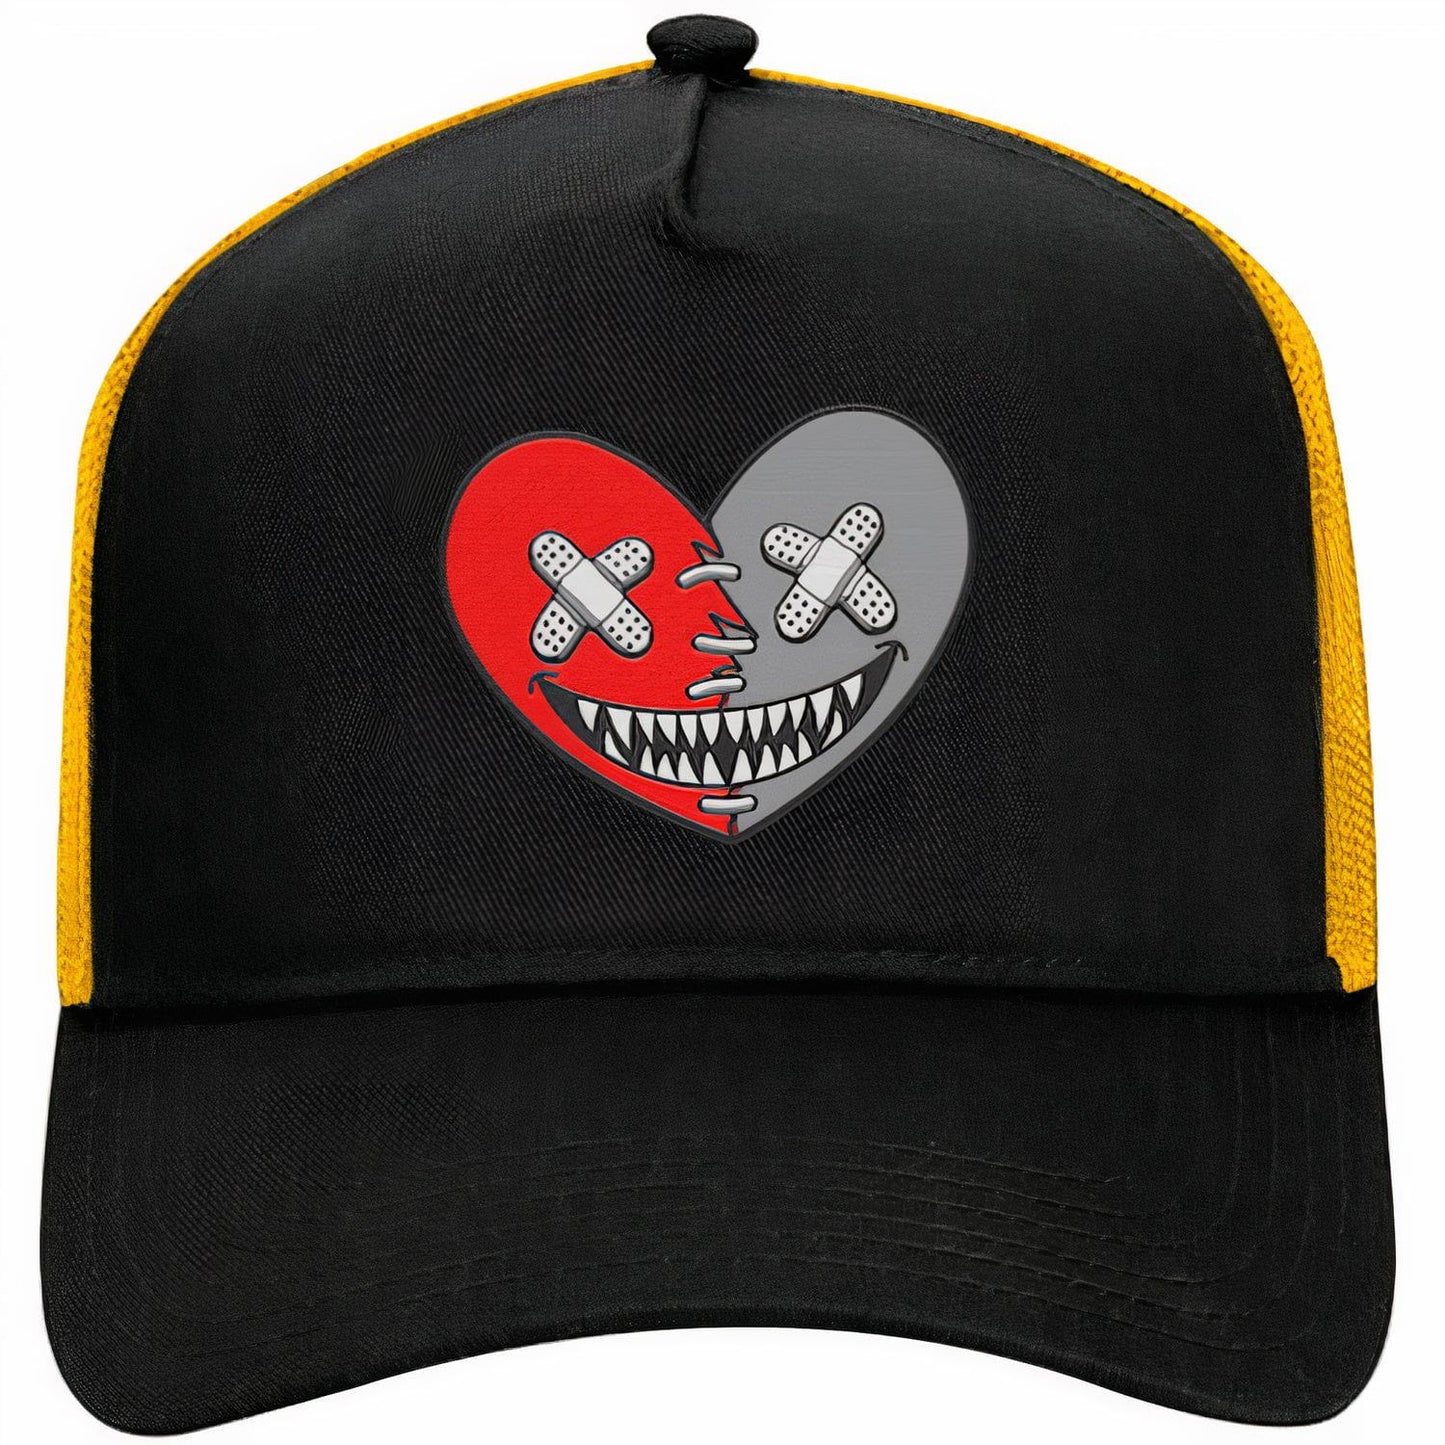 Ochre 6s Trucker Hats - Jordan 6 Ochre 6s Hats - Red Heart Baws